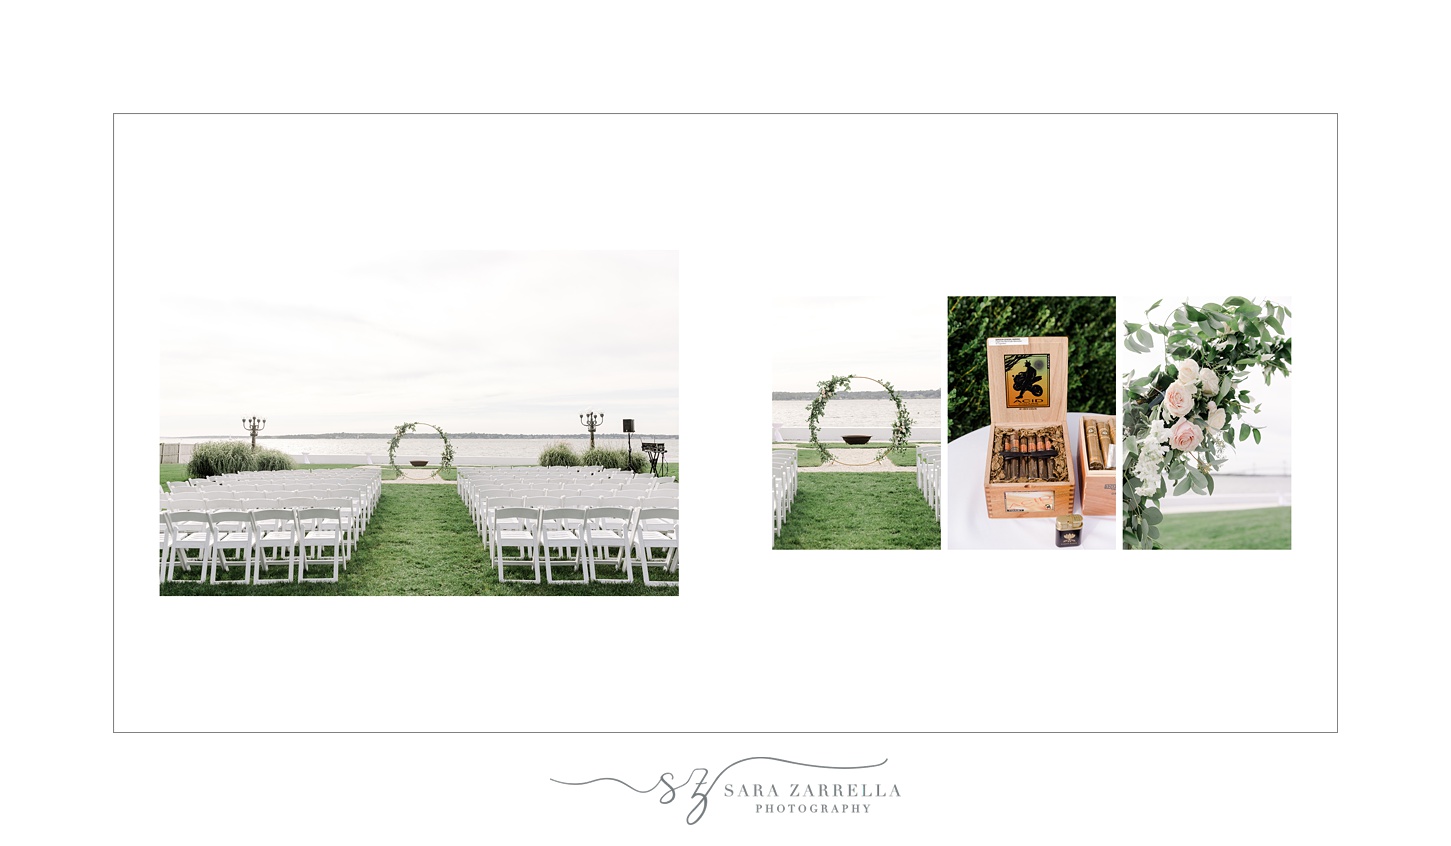 Storybook Album of summer wedding at Belle Mer Island House designed by RI wedding photographer Sara Zarrella Photography